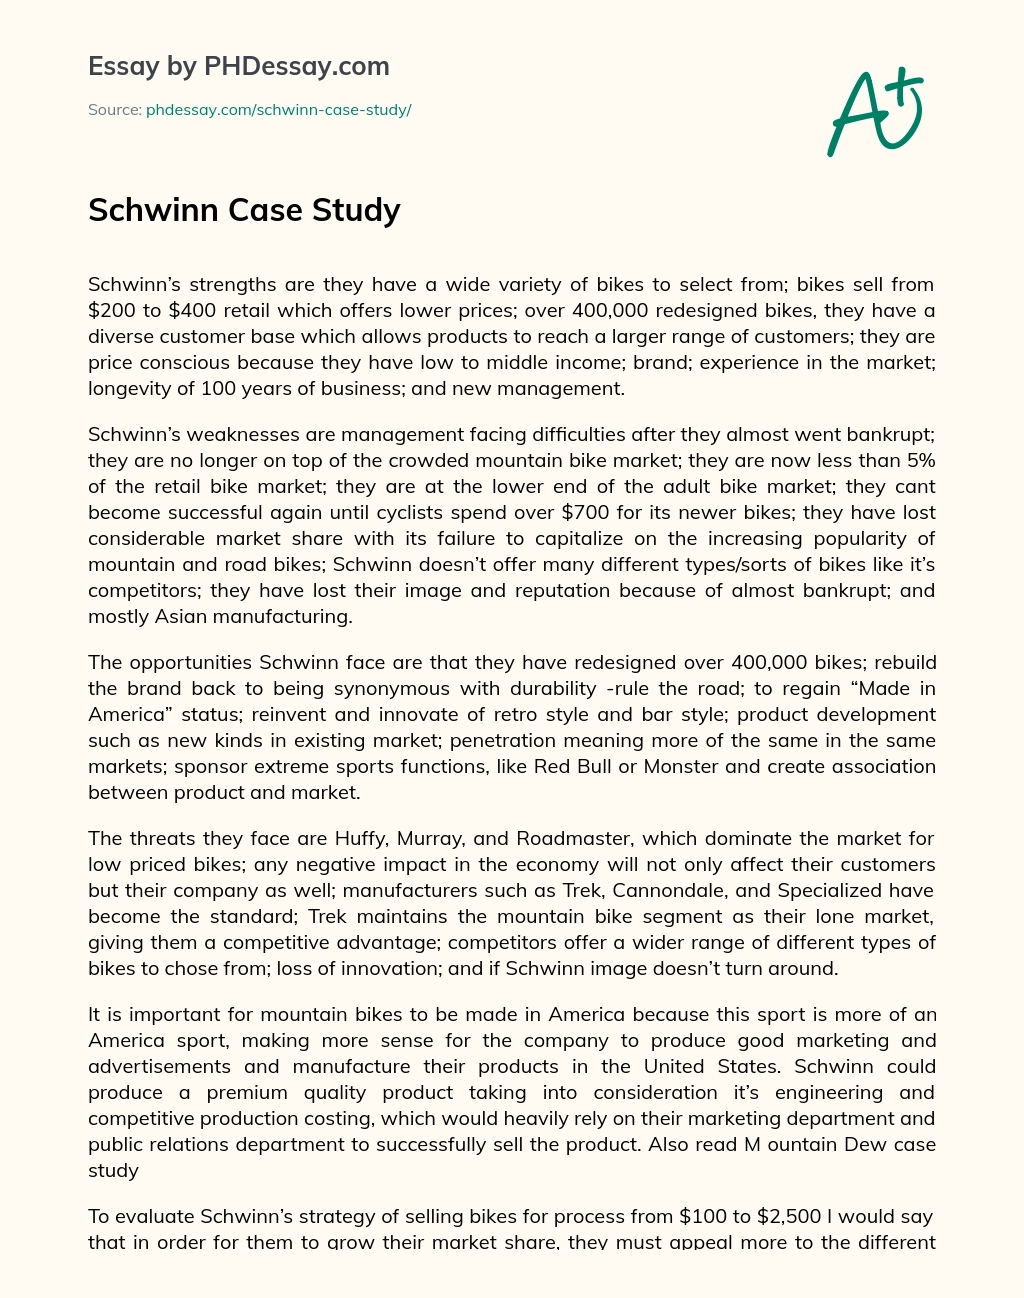 Schwinn Case Study essay